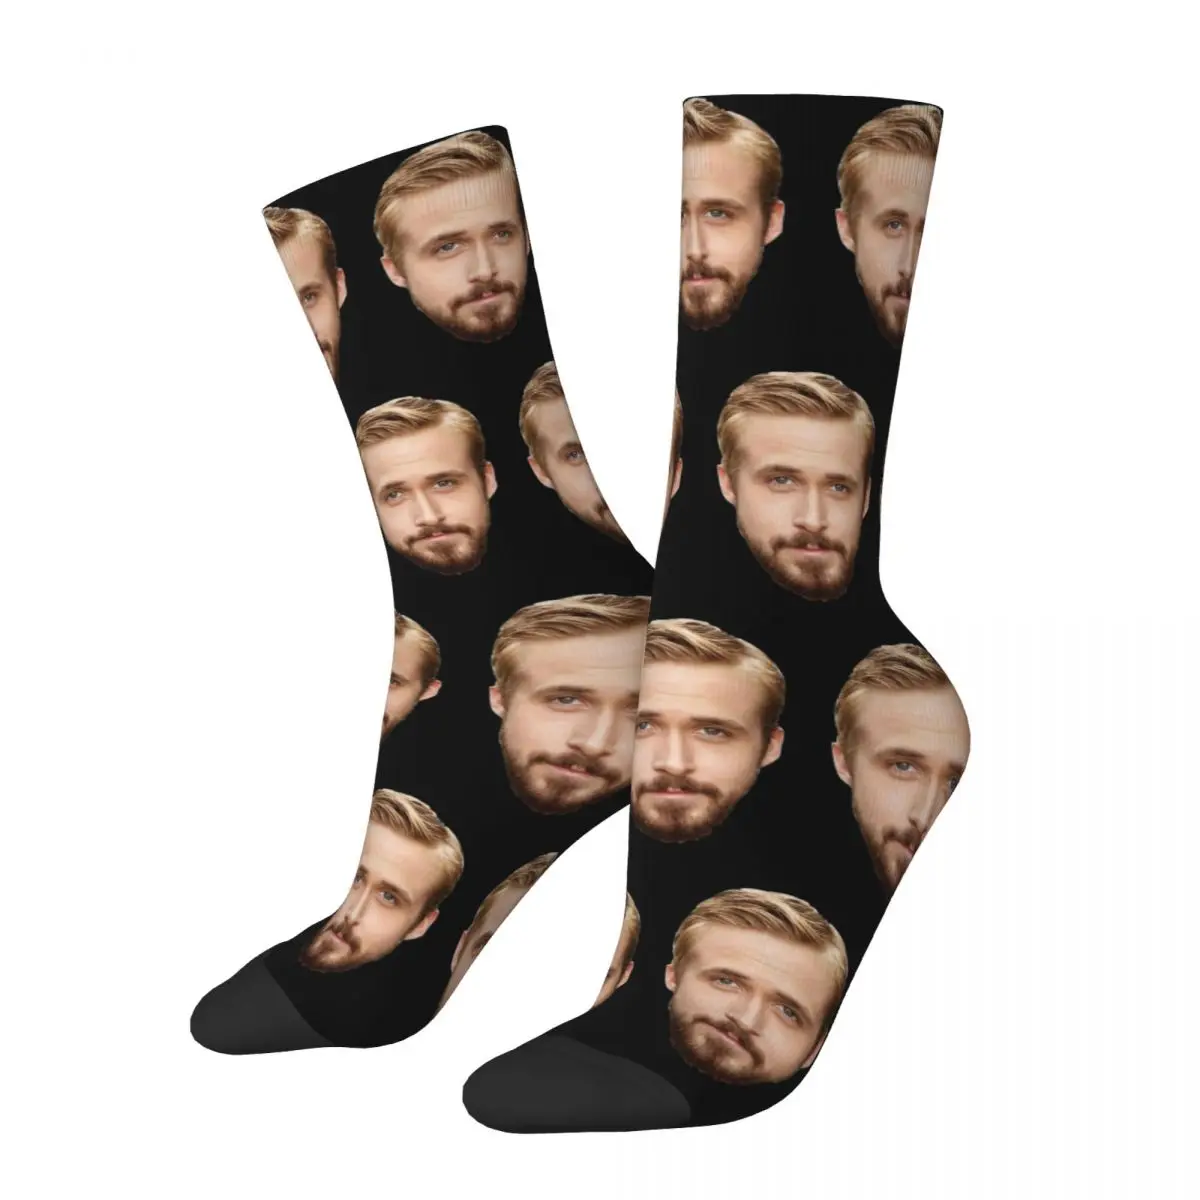 

Fashion Ryan Gosling Theme Design Basketball Crew Socks Product All Season Funny Actor Cotton Middle Tube Socks Sweat Absorbing